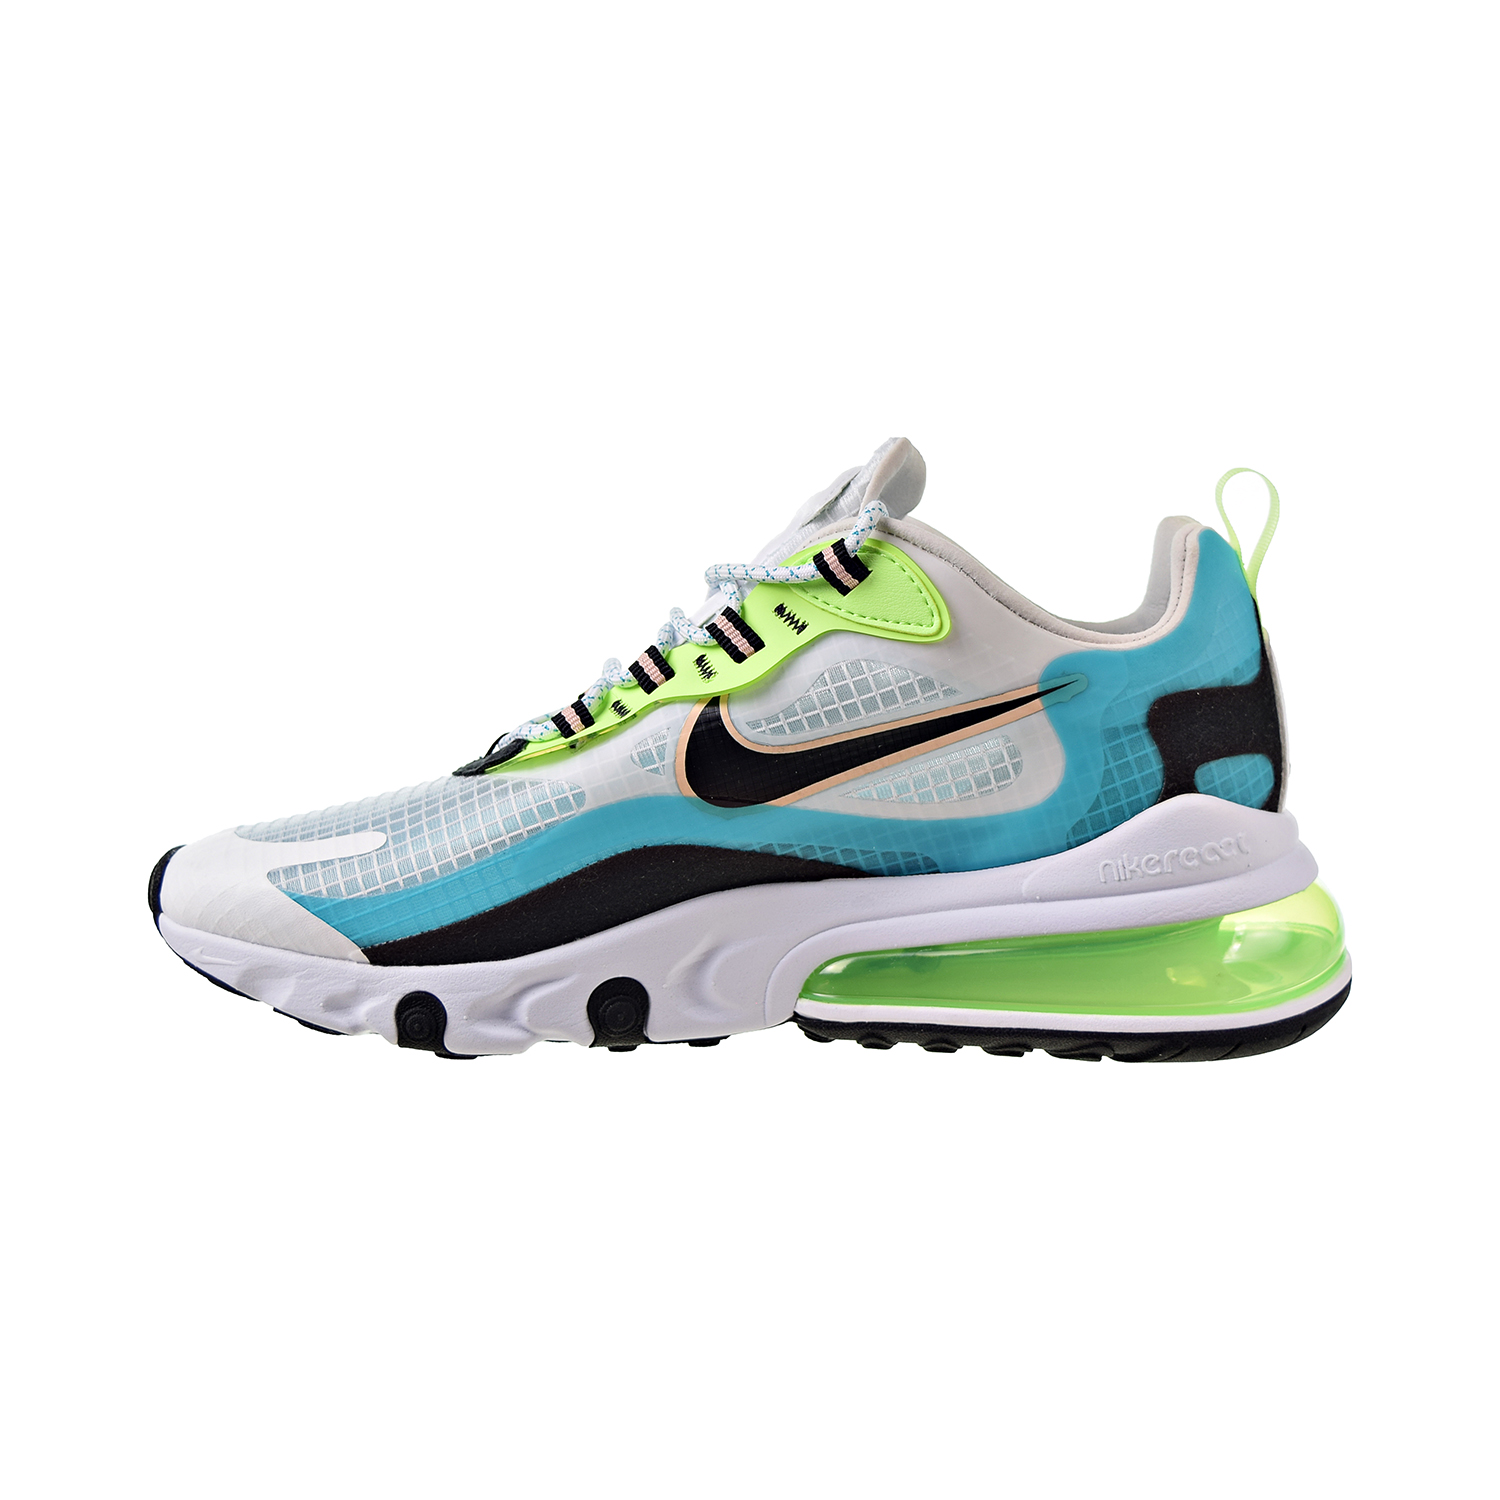 Nike Air Max 270 React SE Men's Shoes Oracle Aqua-Black-Ghost Green ct1265-300 - image 4 of 6